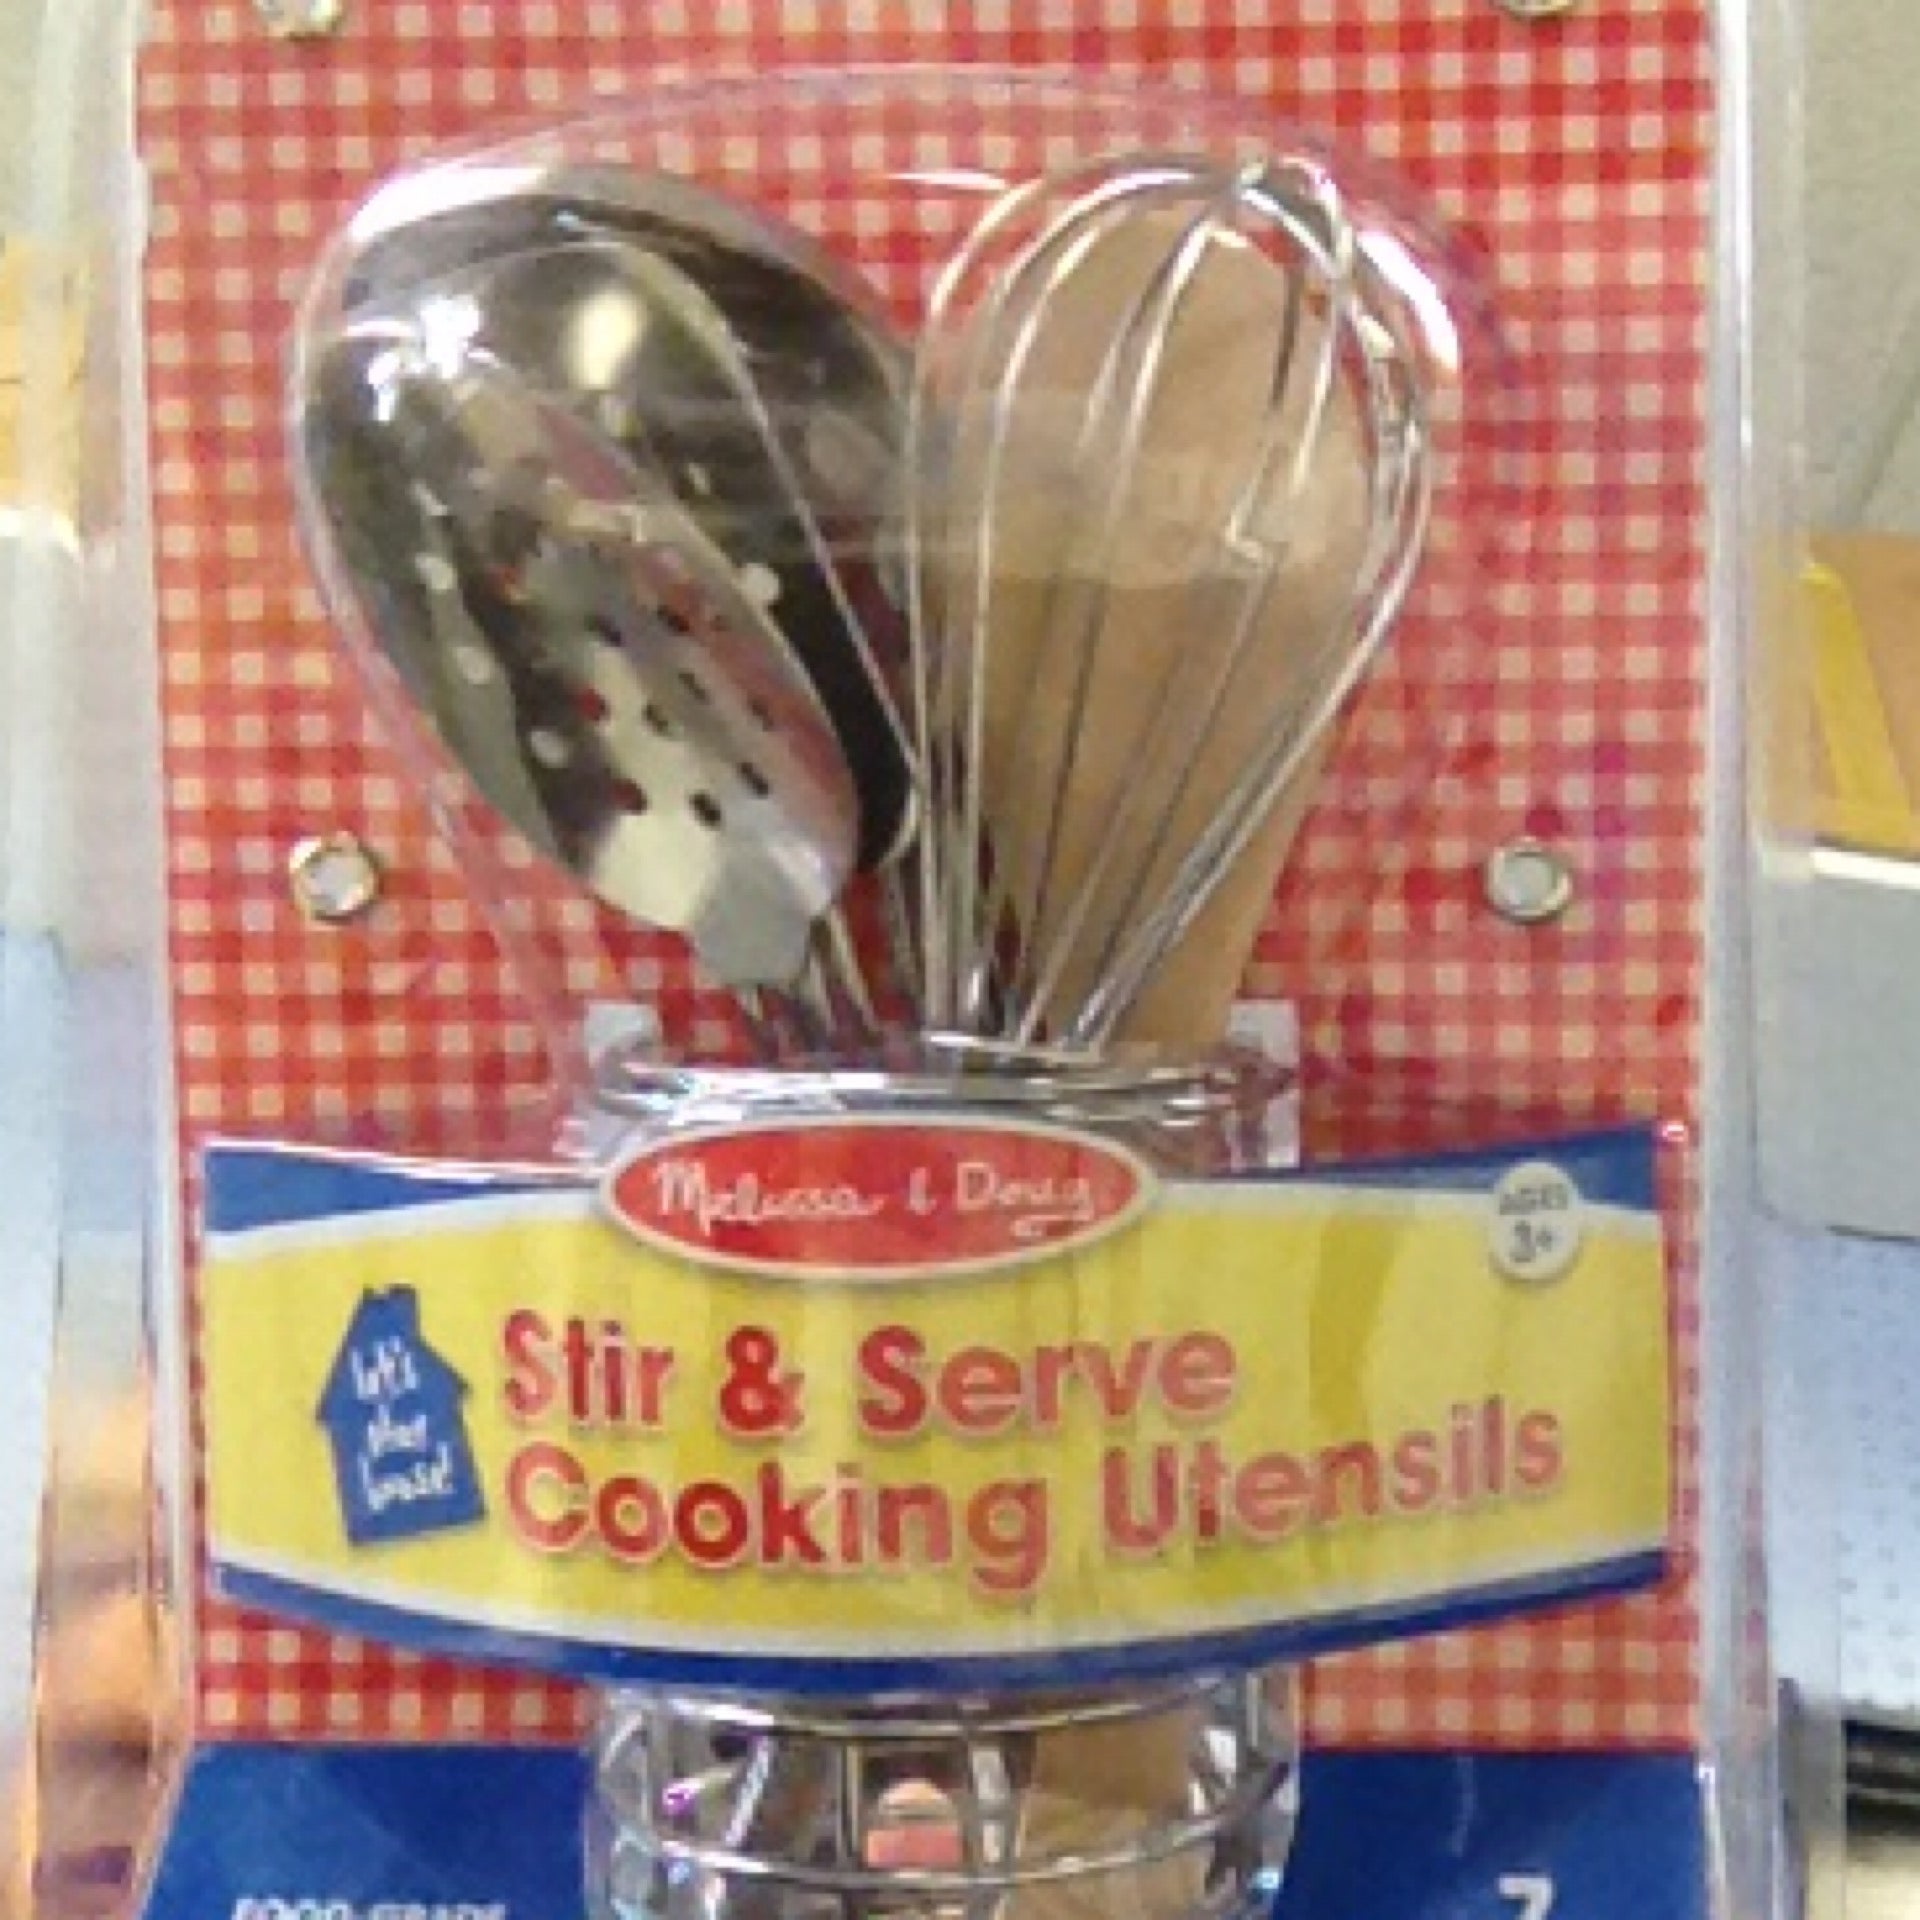 Melissa & Doug Stir and Serve Cooking Utensils - 7 piece